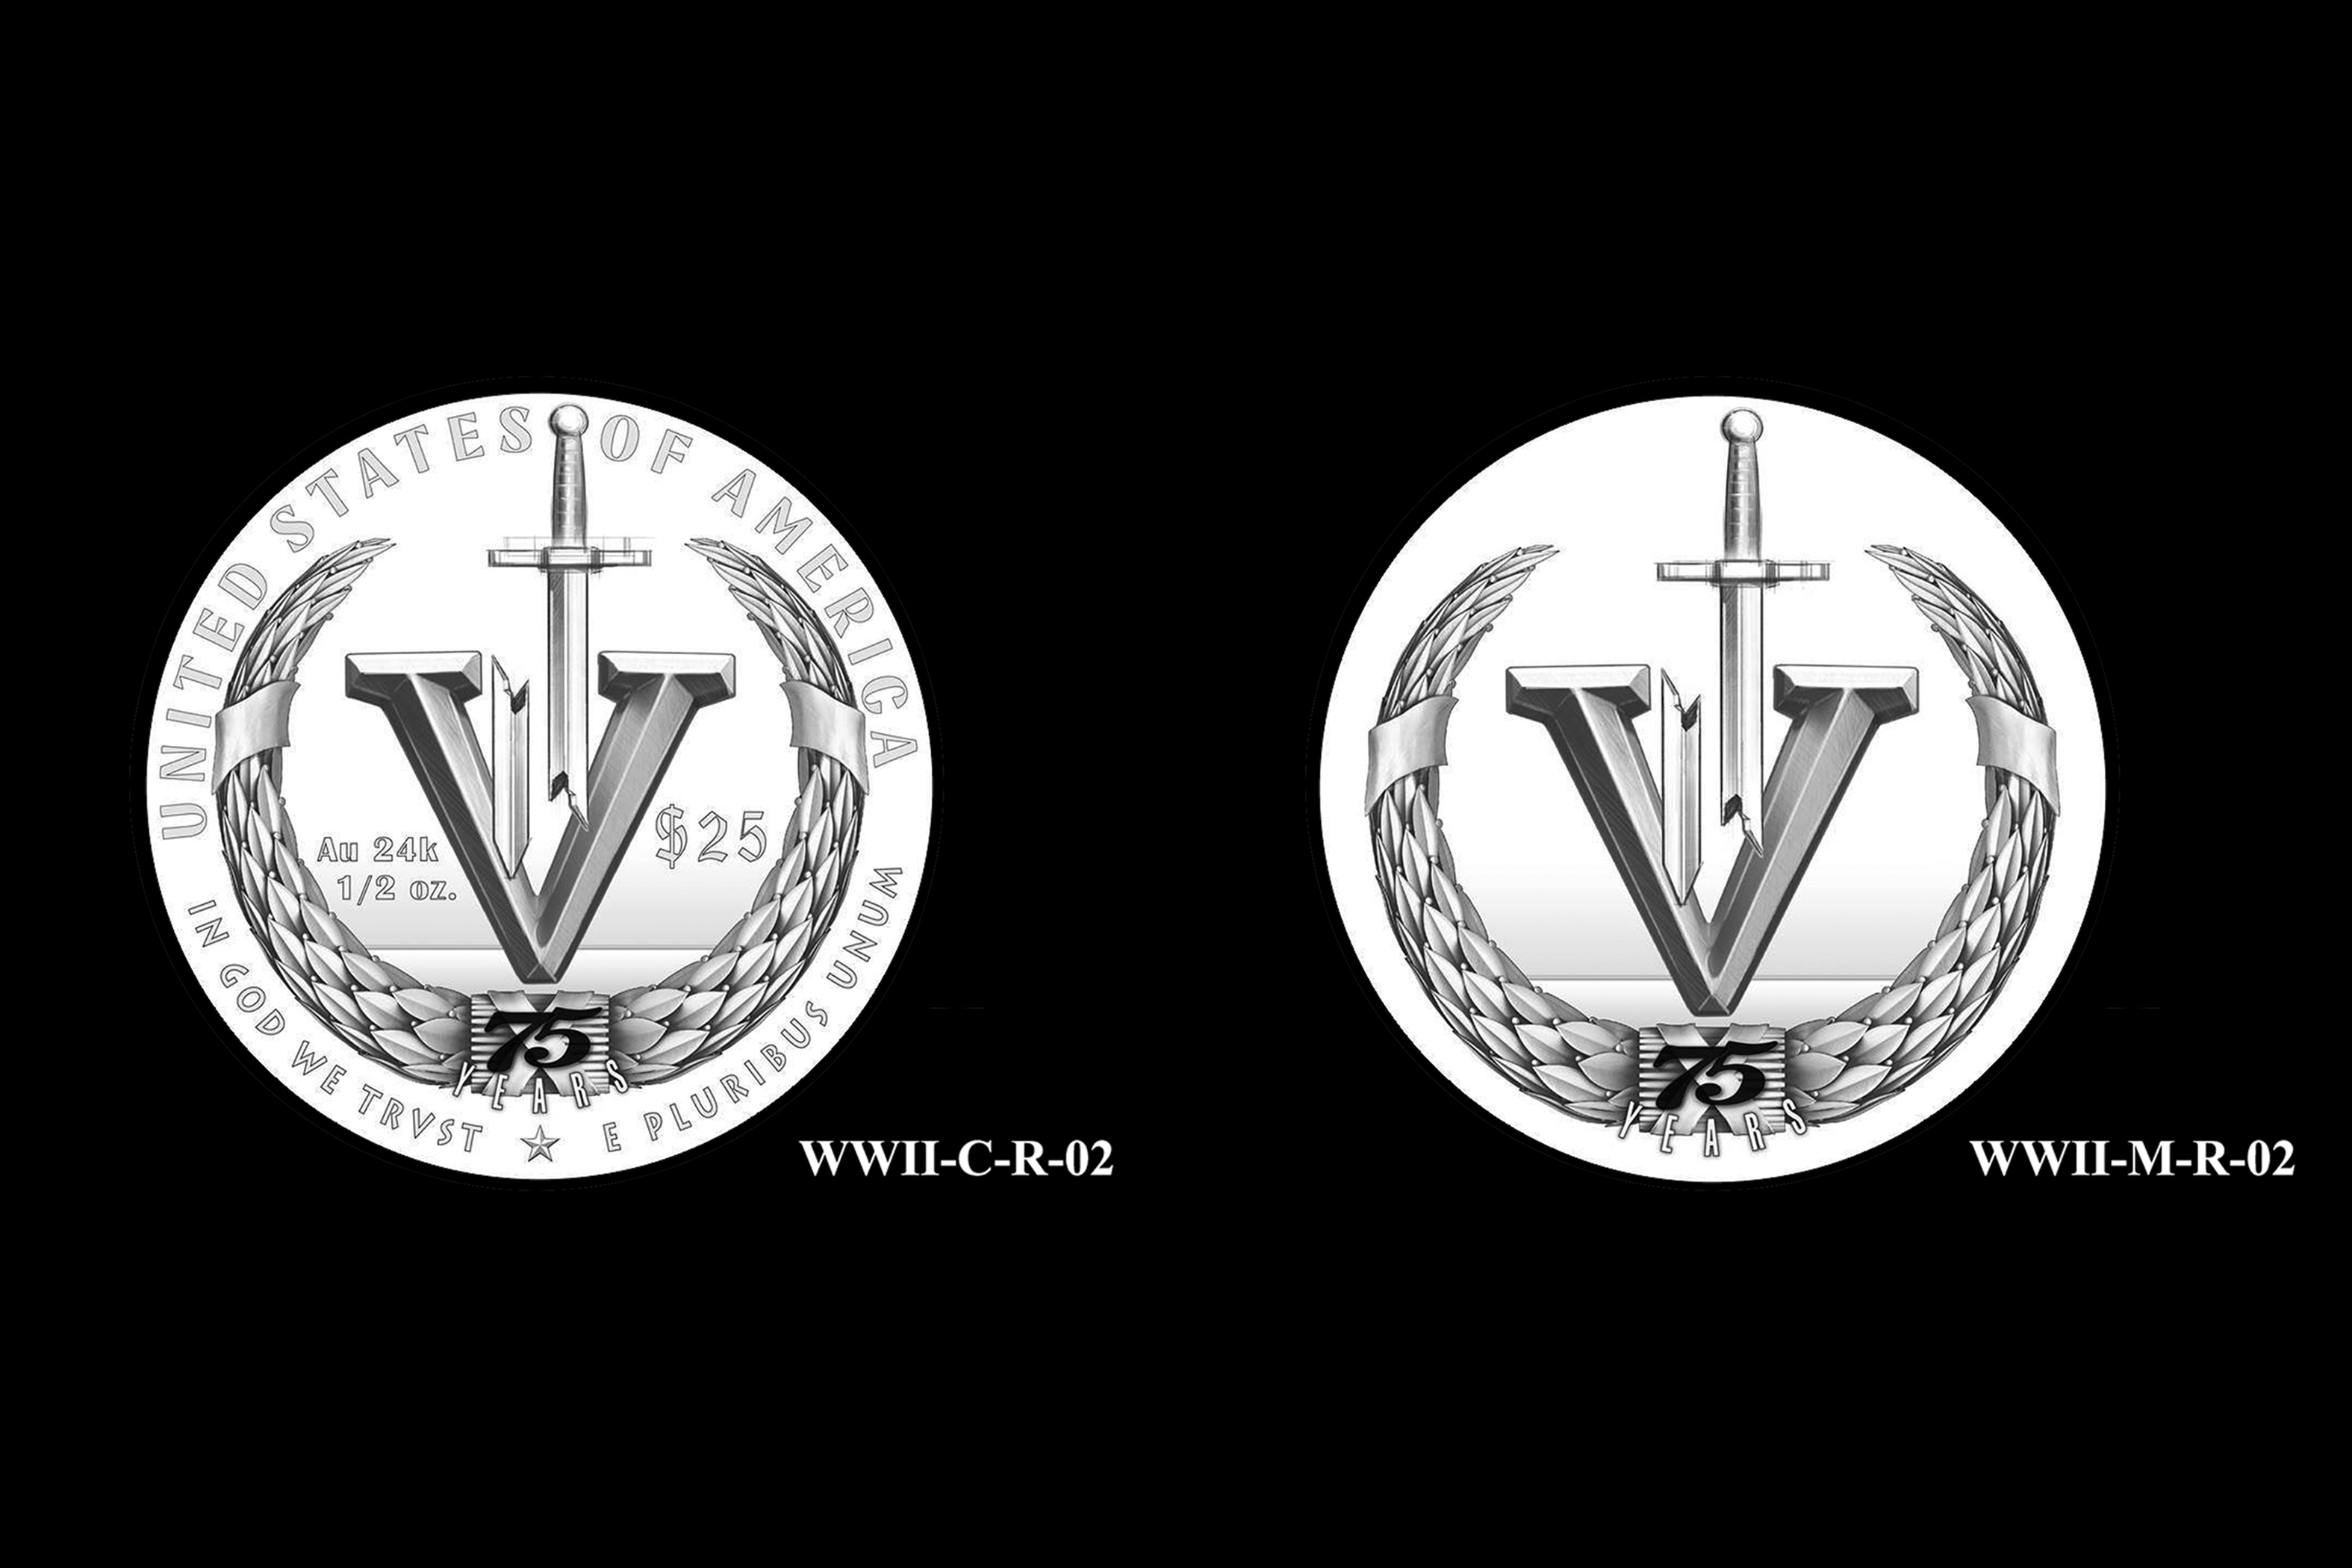 WWII-C-R-02 and WWII-M-R-02 -- End of World War II 75th Anniversary Program - Reverse